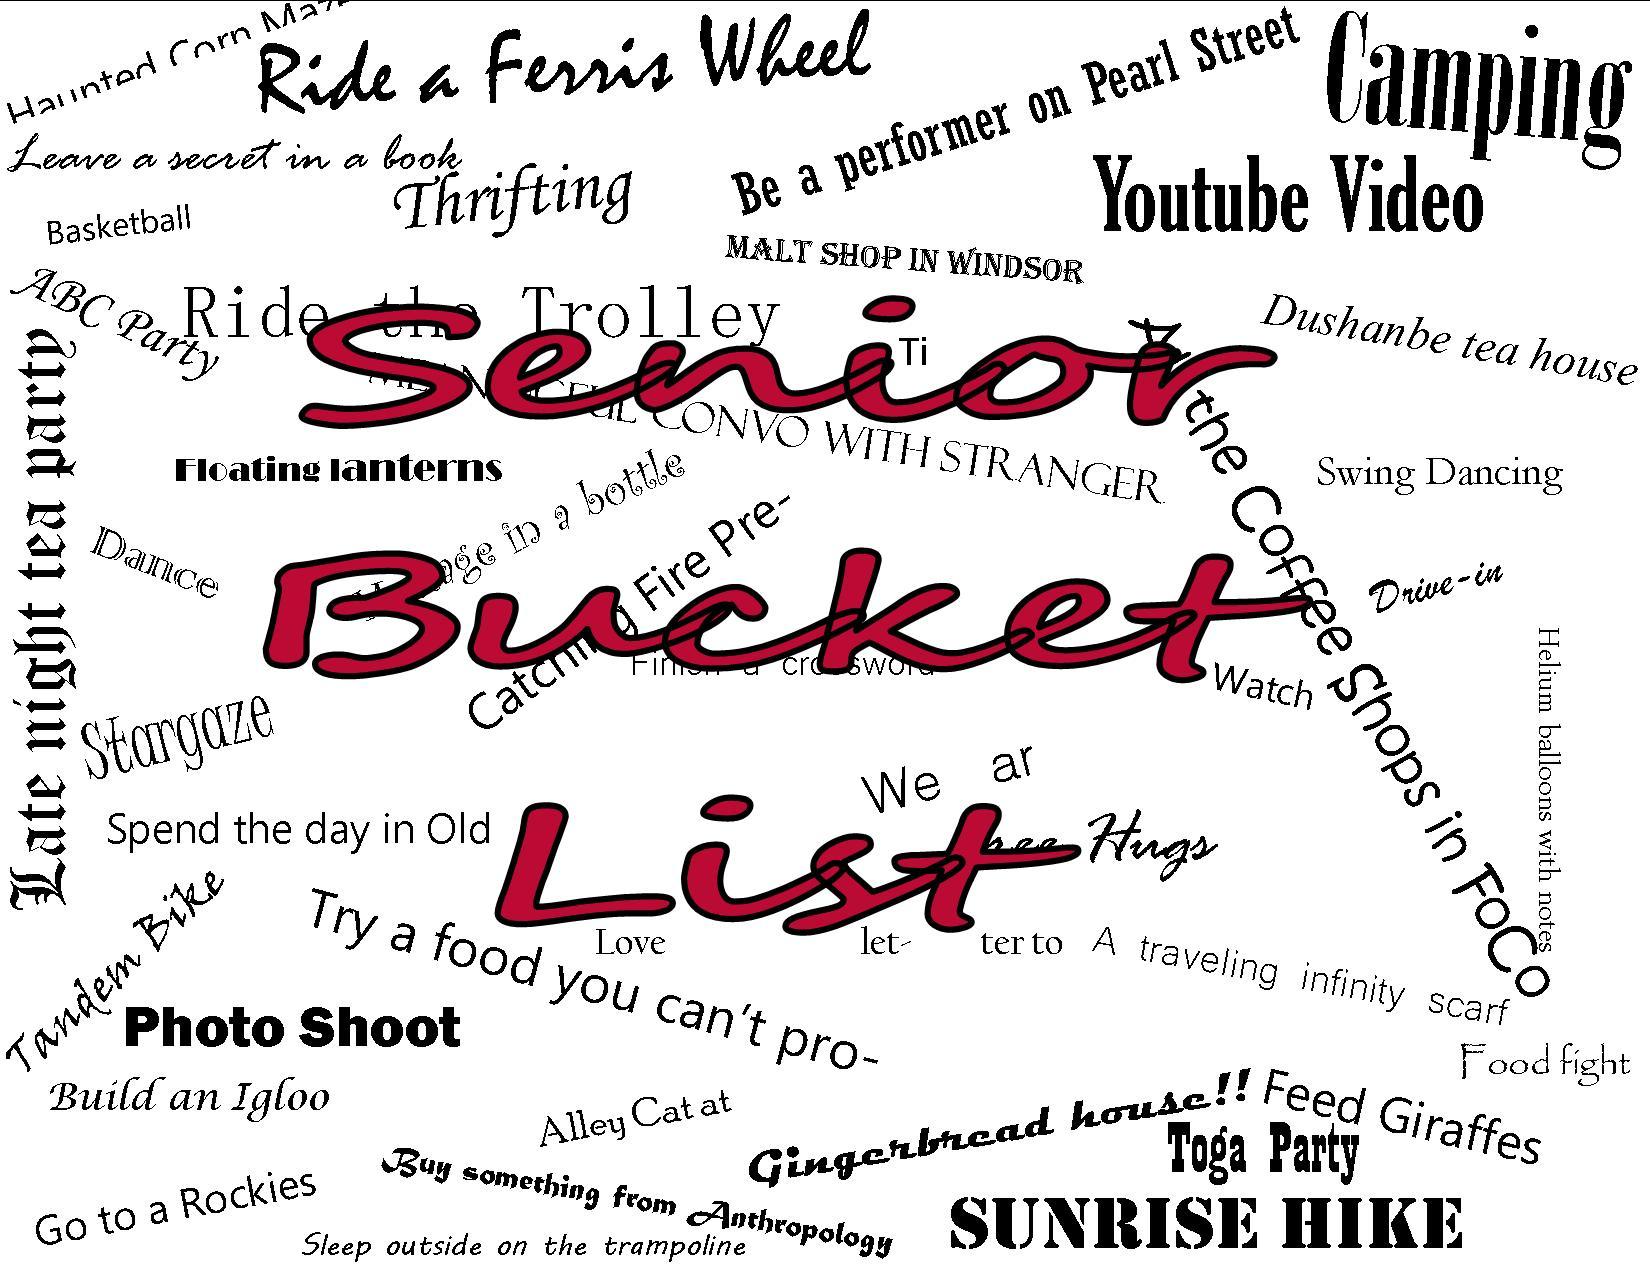 Senior bucket list: Black Friday